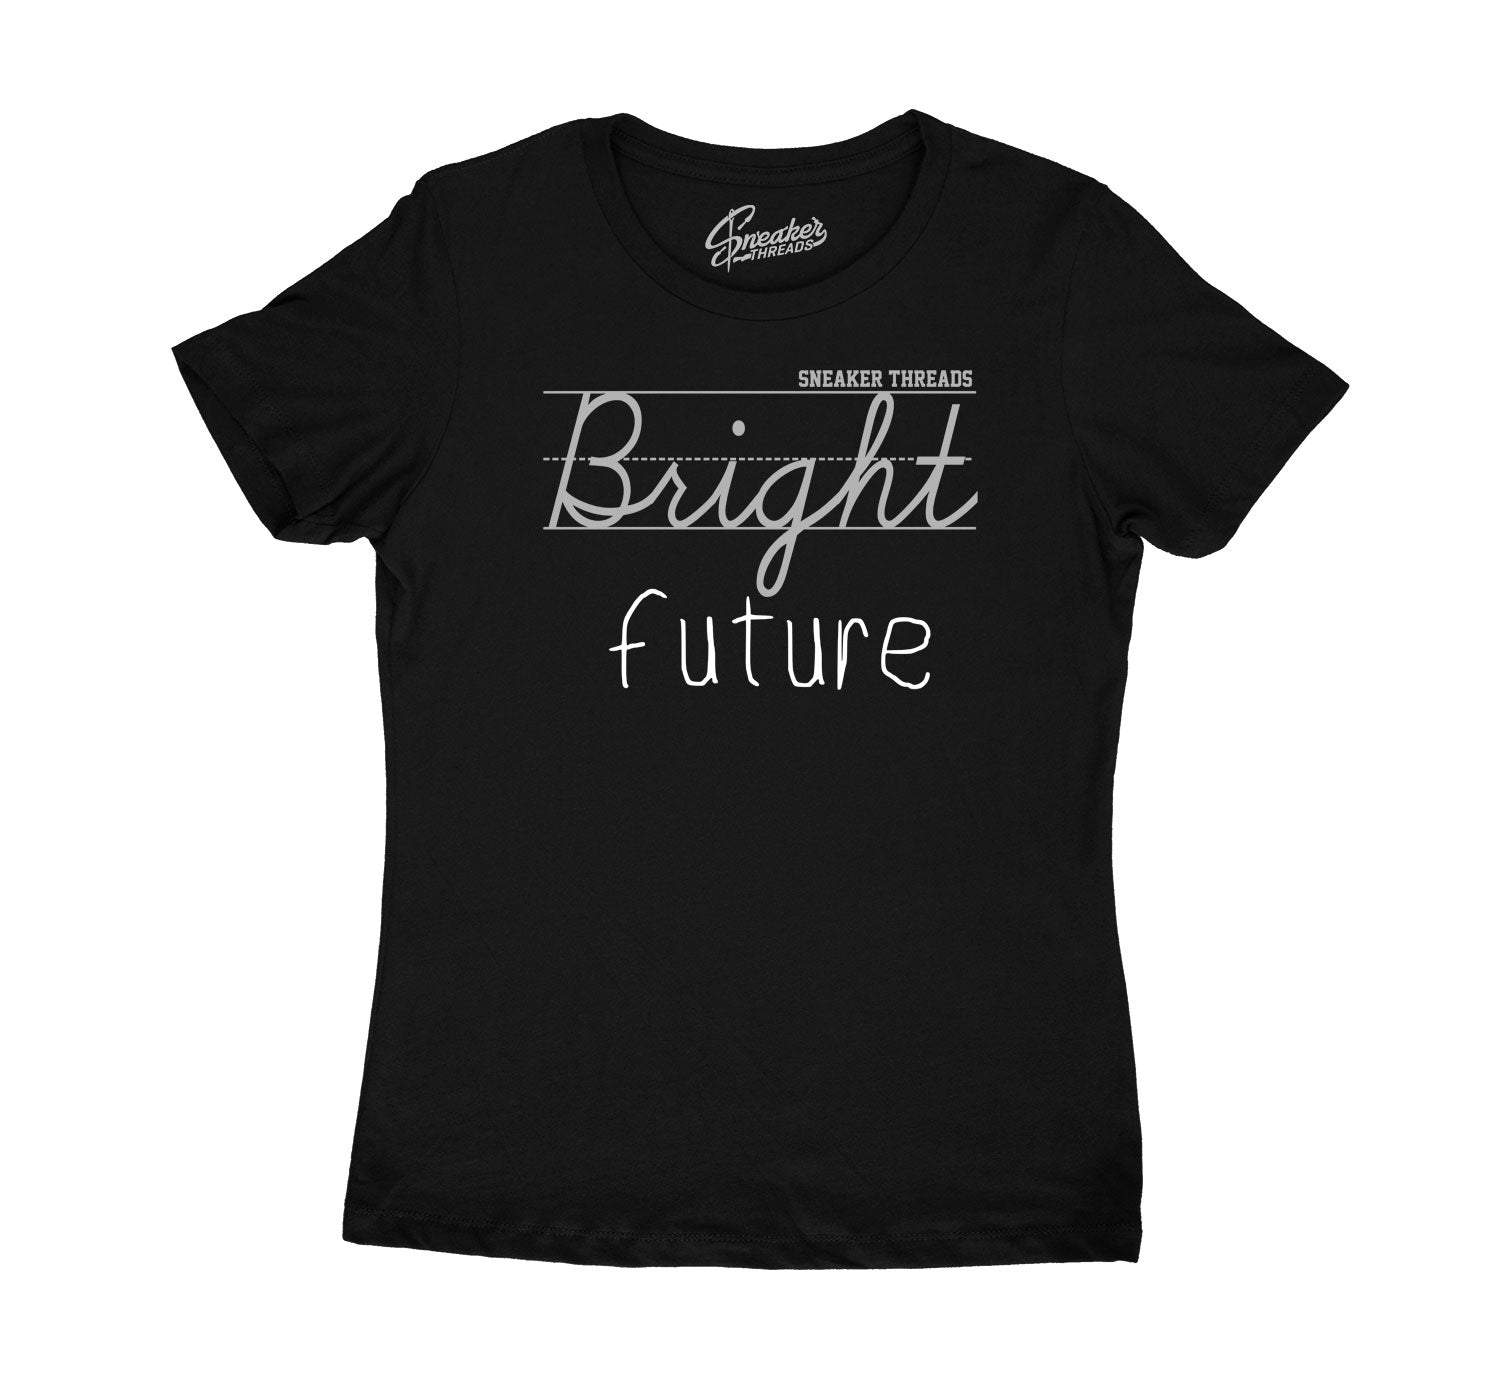 Womens Silver Toe 1 Shirt - Bright Future- Black